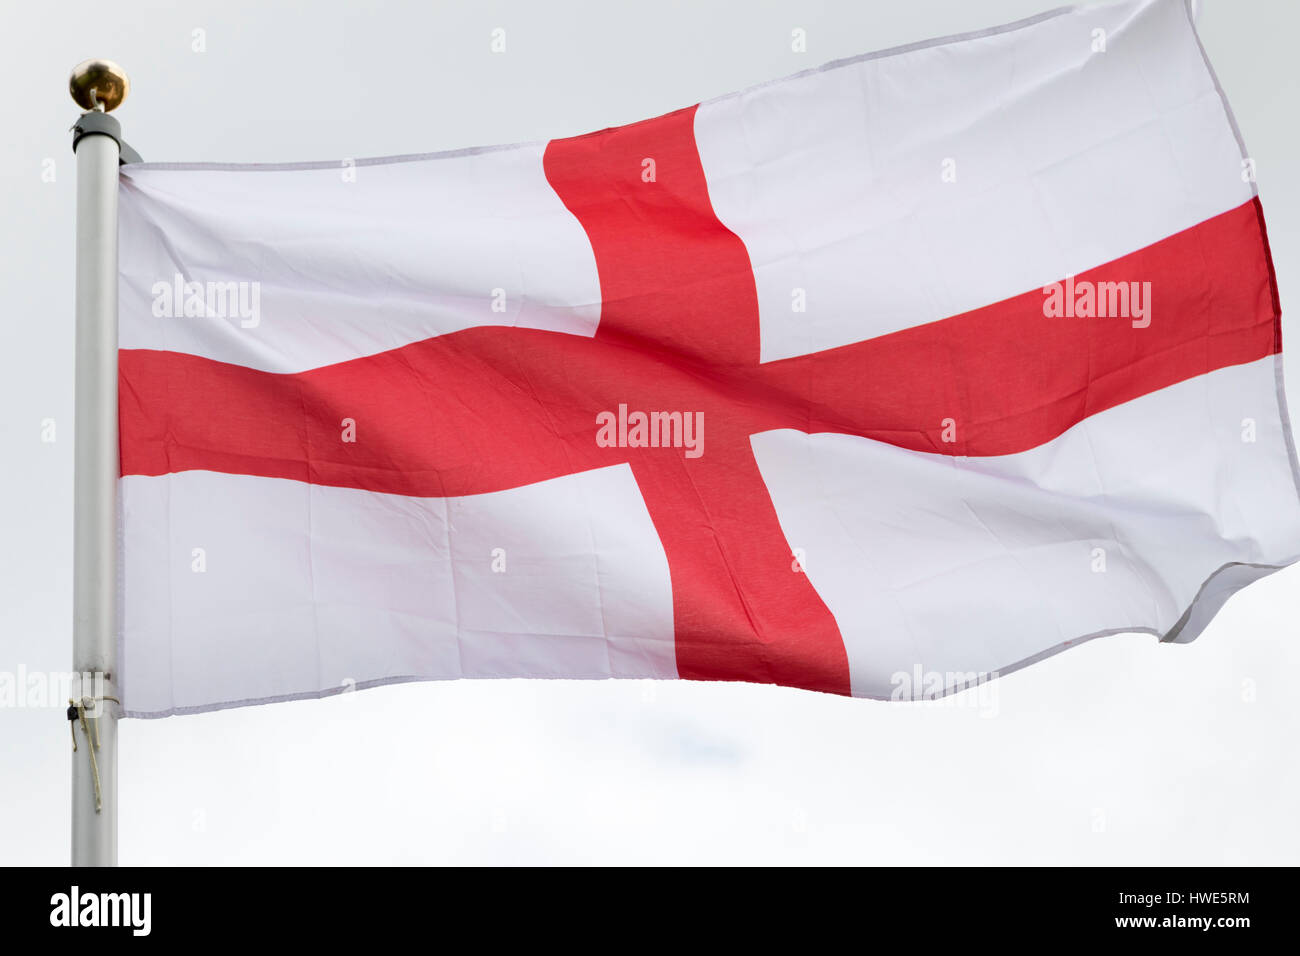 Flag of England : St George's Cross. Stock Photo